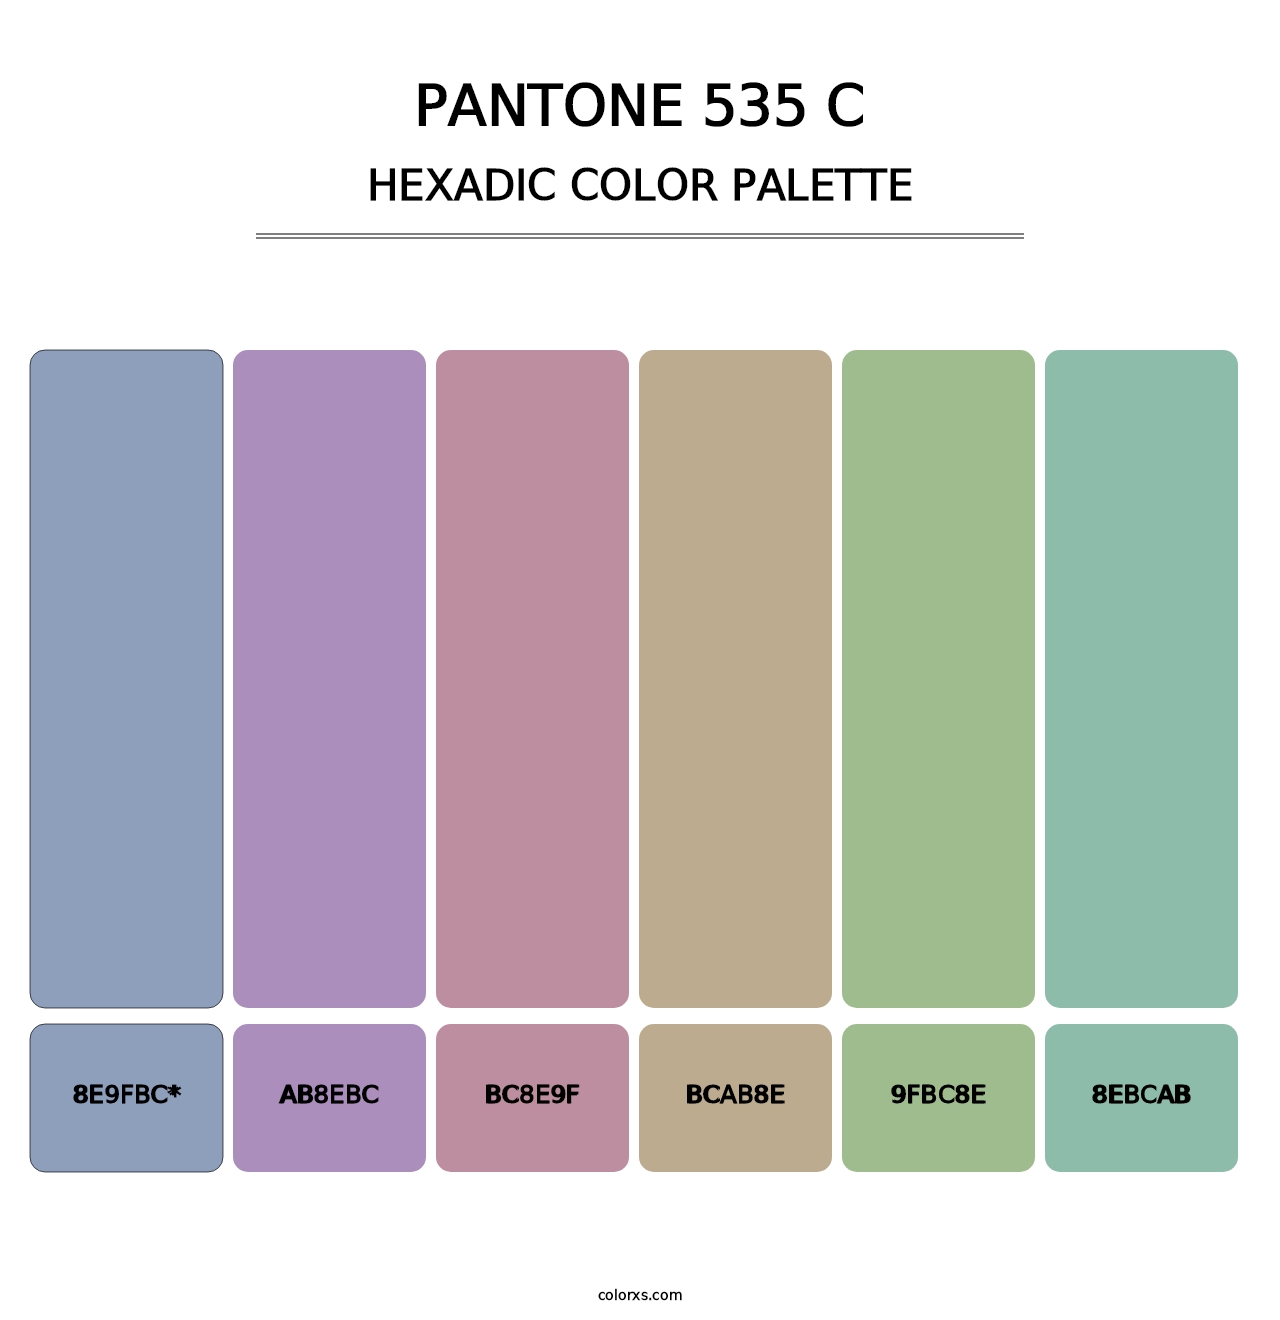 PANTONE 535 C - Hexadic Color Palette